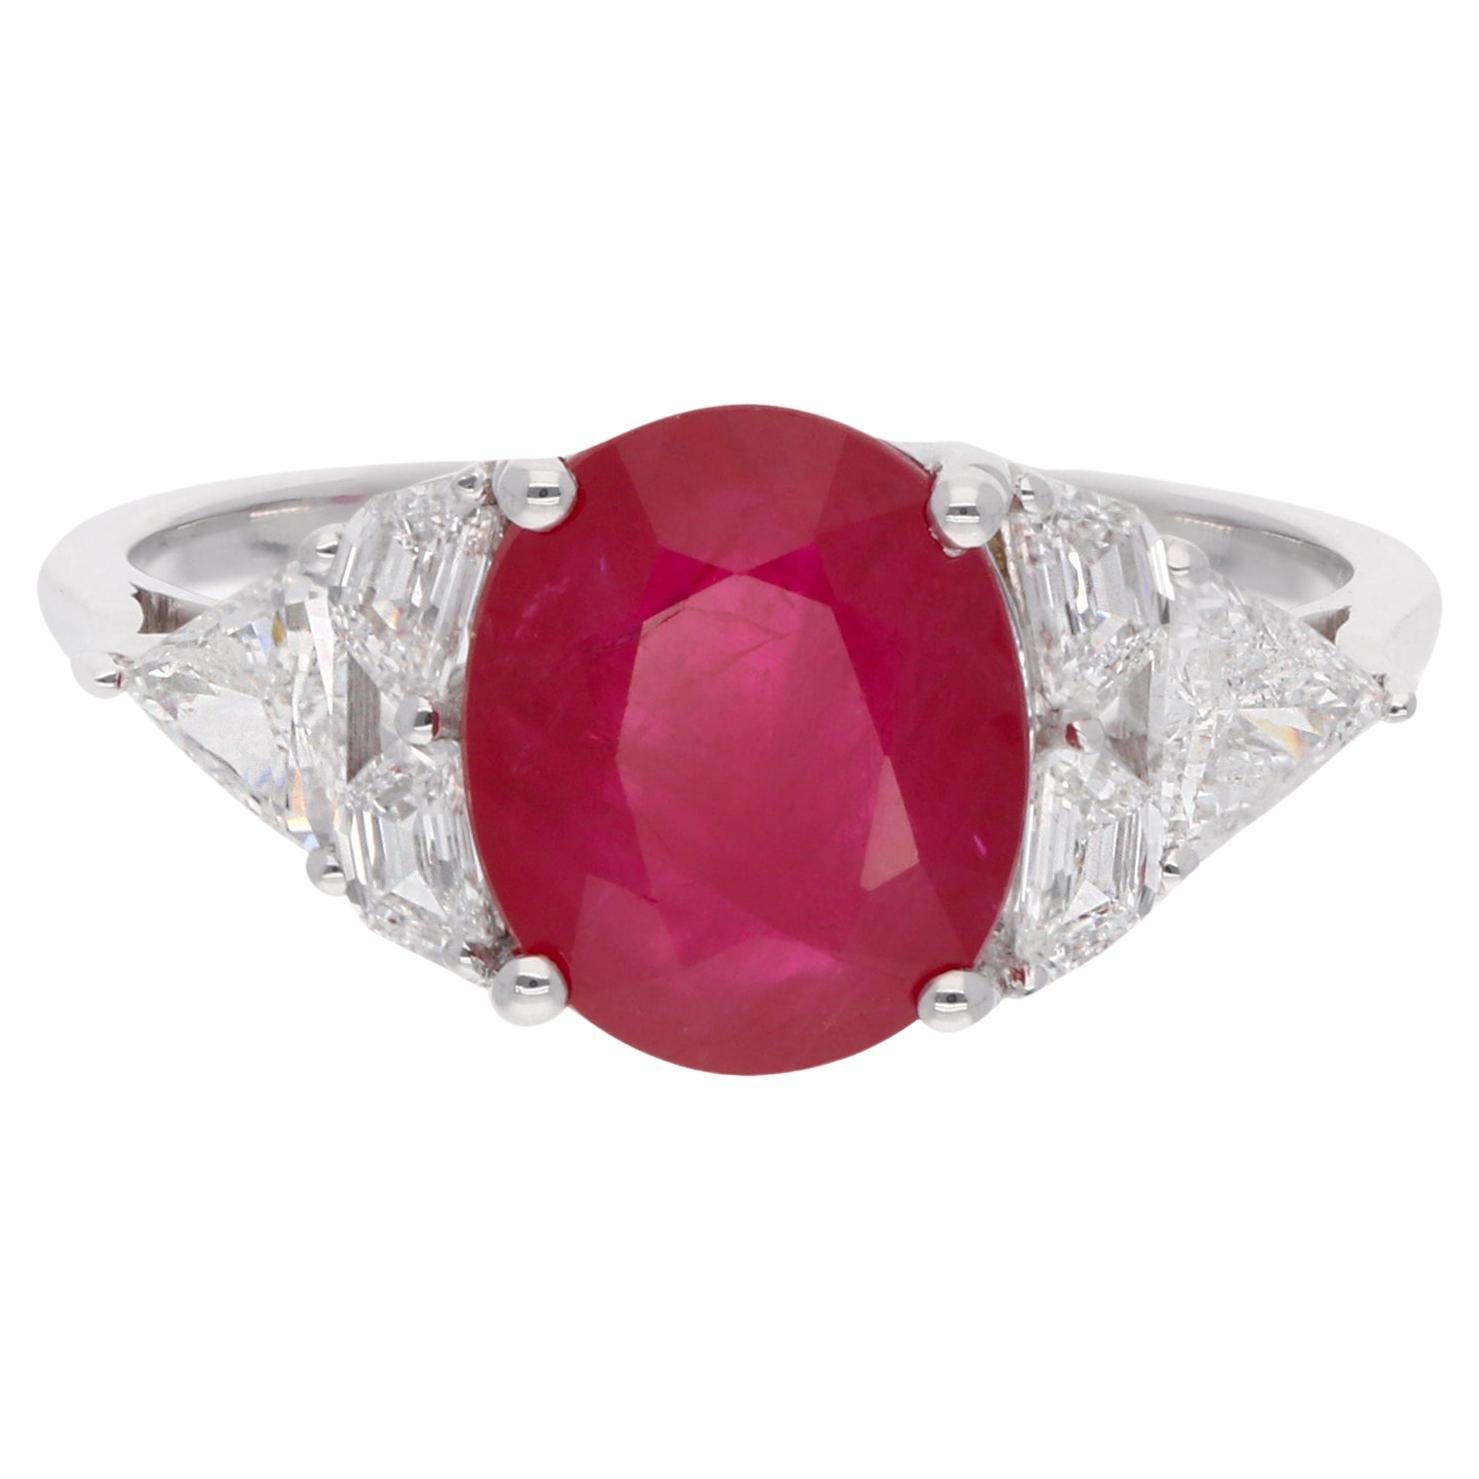 Natural Oval Ruby Gemstone Ring SI Clarity HI Color Diamond 18 Karat White Gold